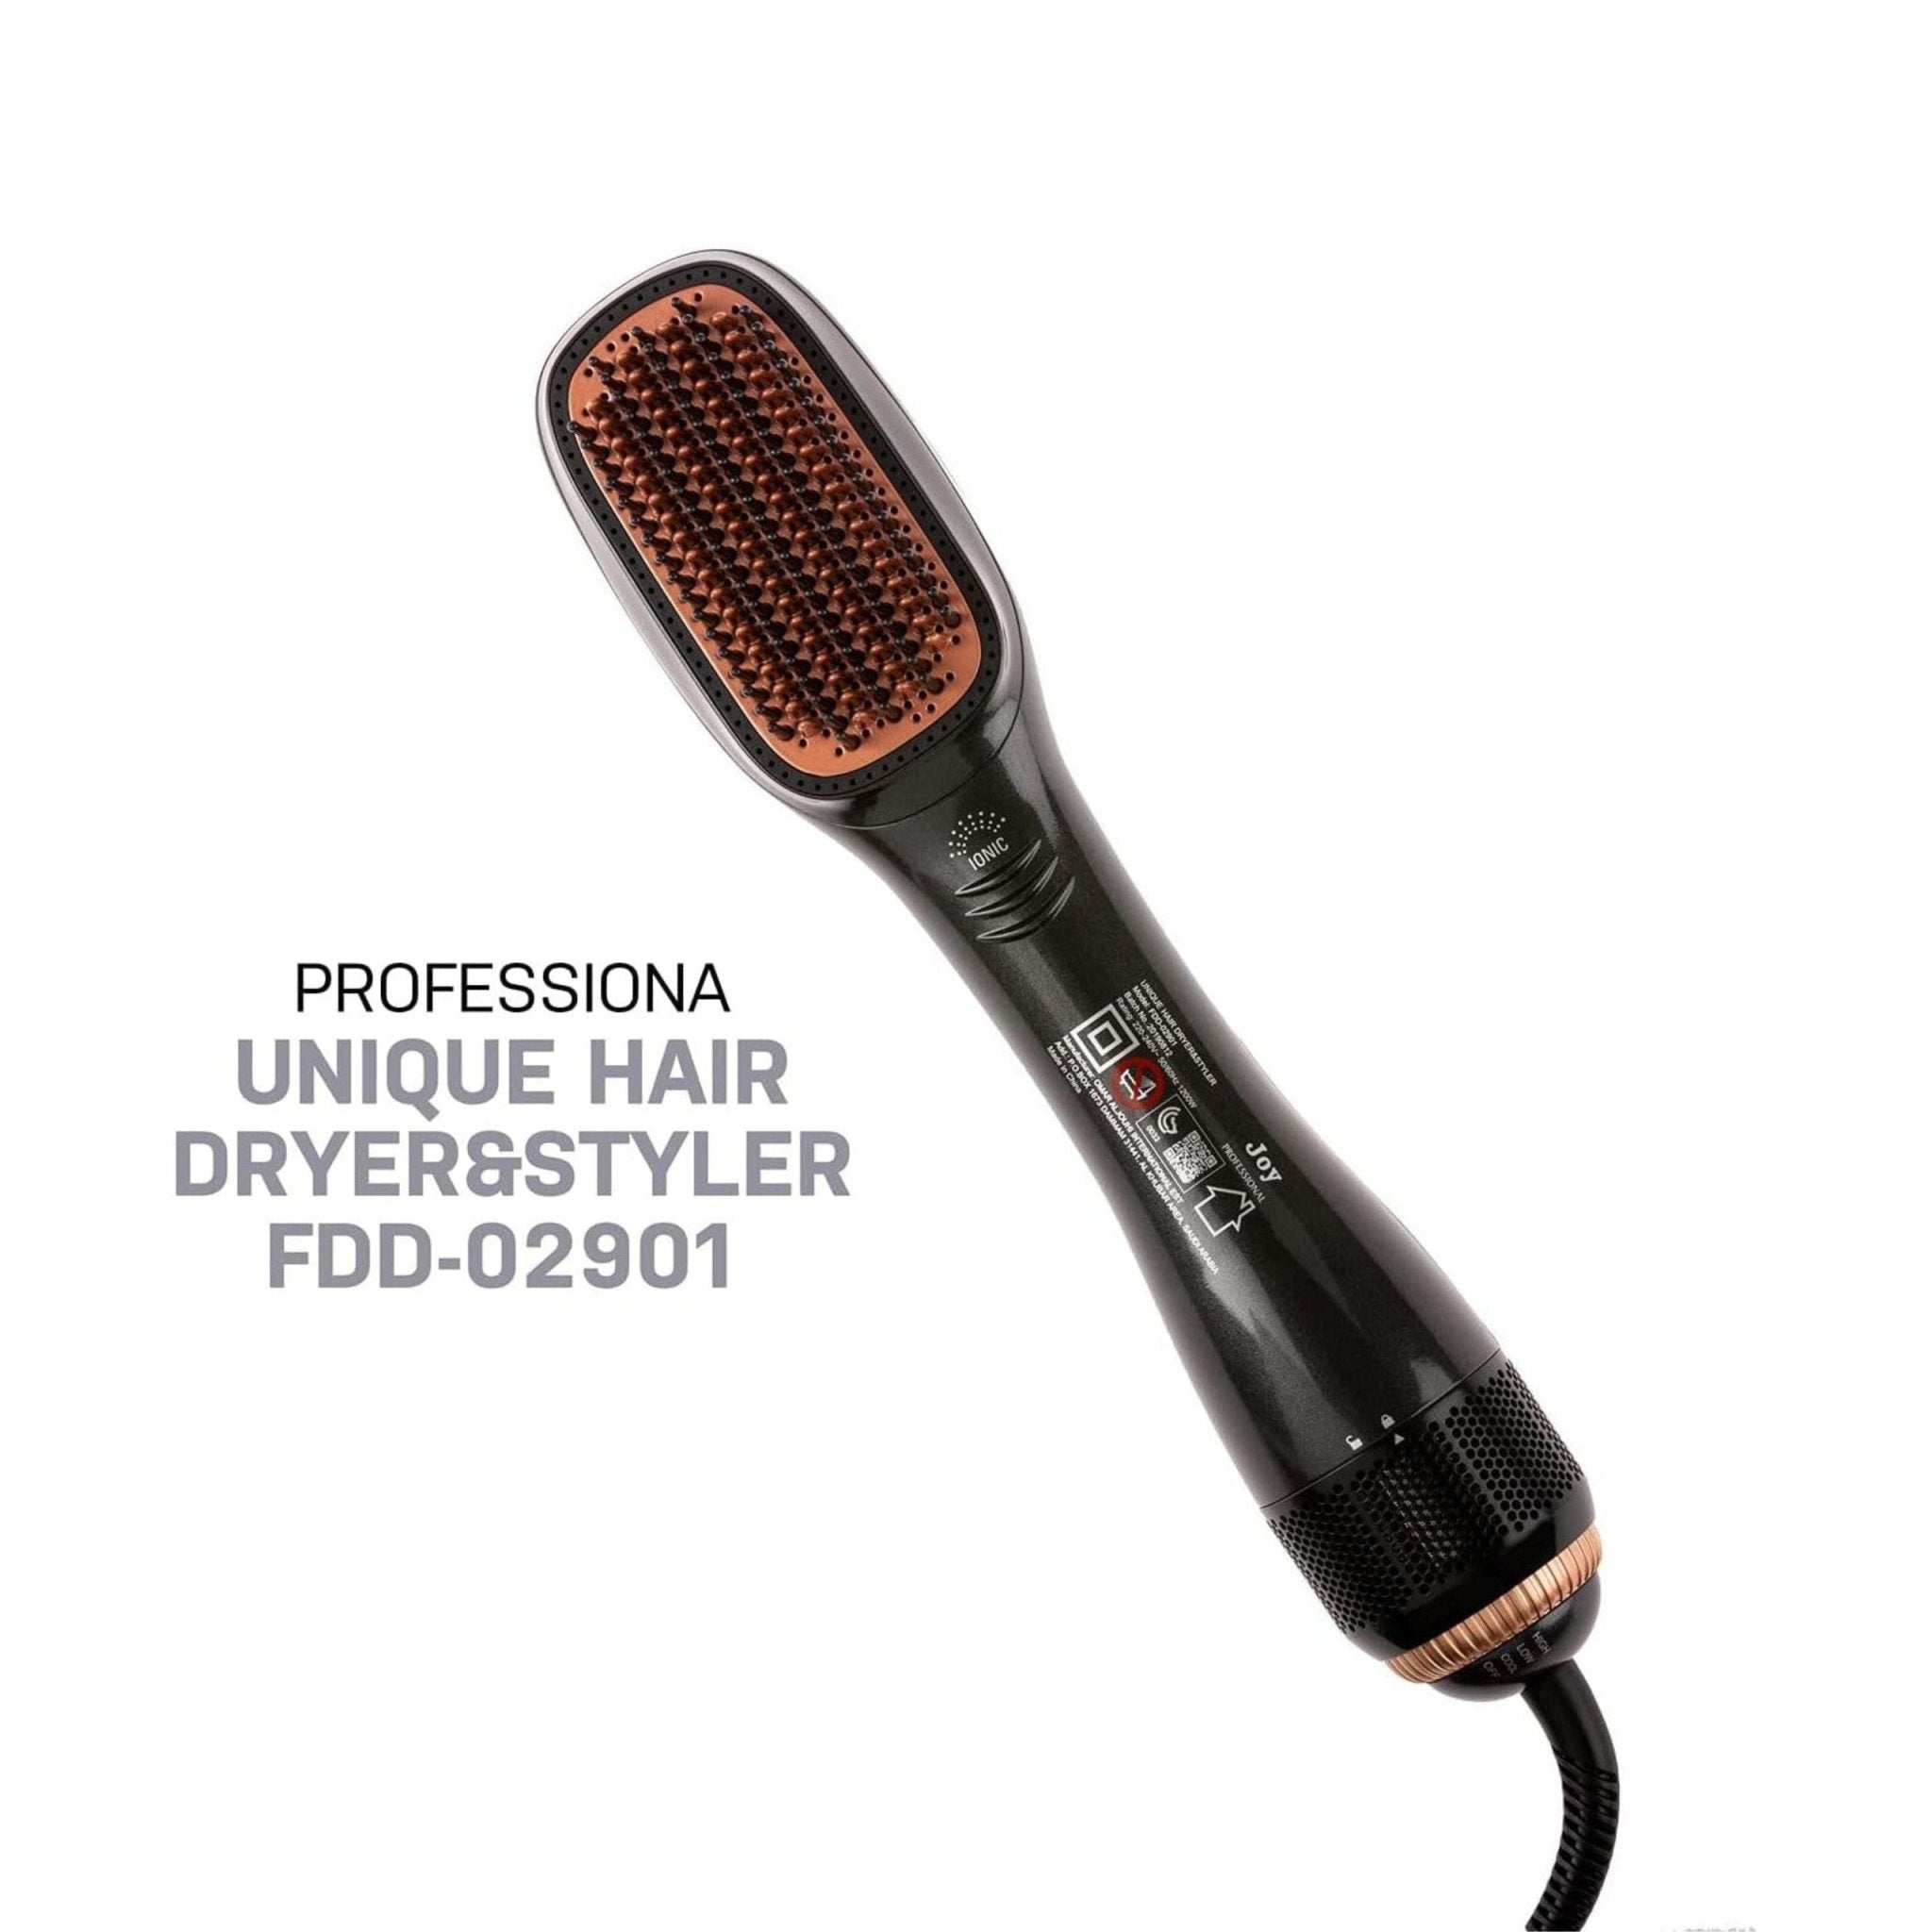 Joy Professional 2 in 1 Hair Dryer & Styler 1200W FDD-02901 - Black